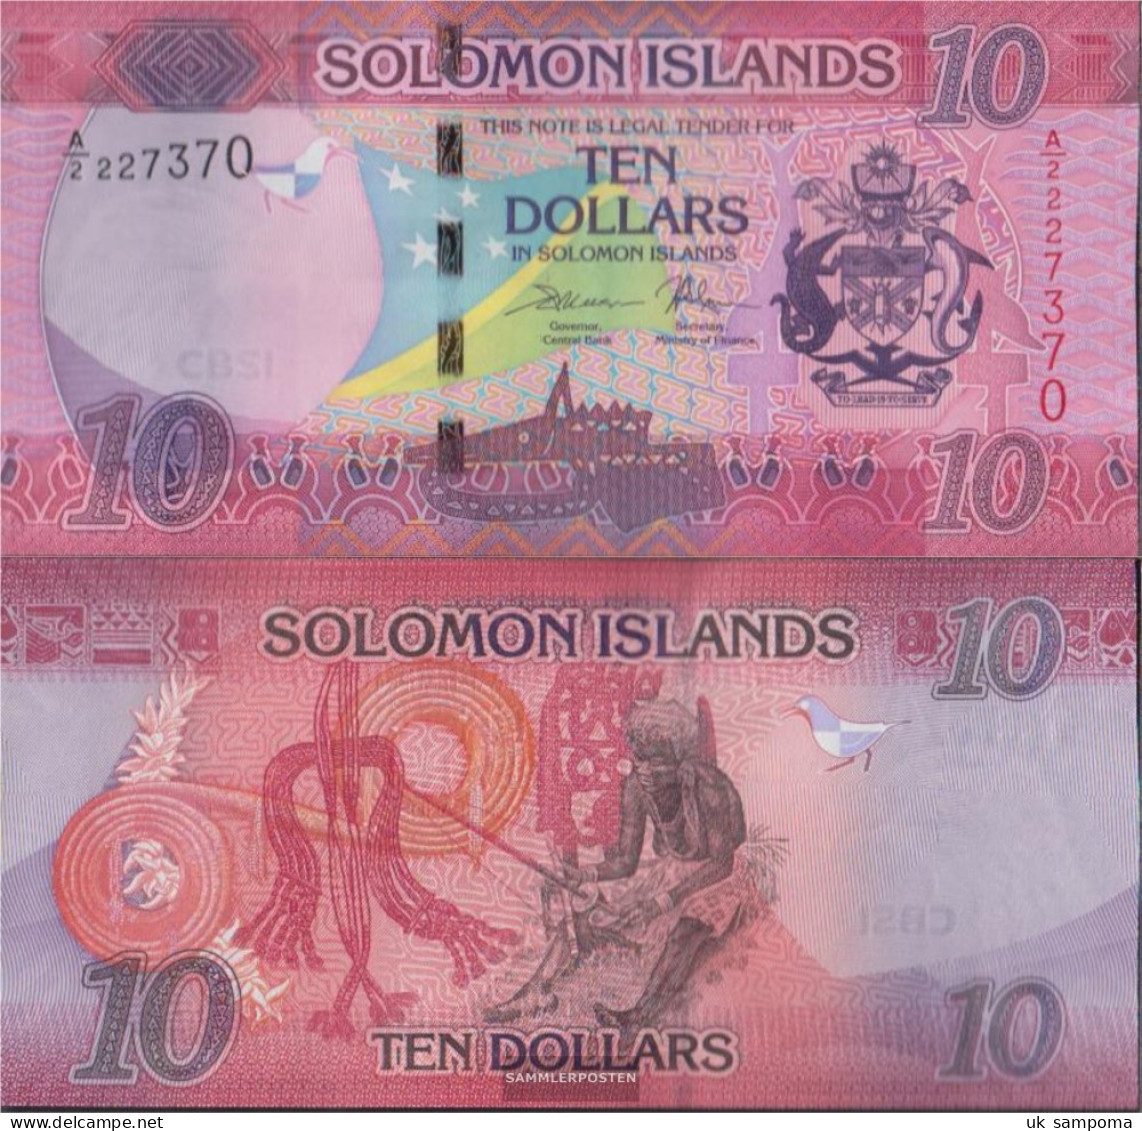 SOLOMON ISLANDS 40 DOLLARS 2018 P-37 UNC COMMEMORATIVE